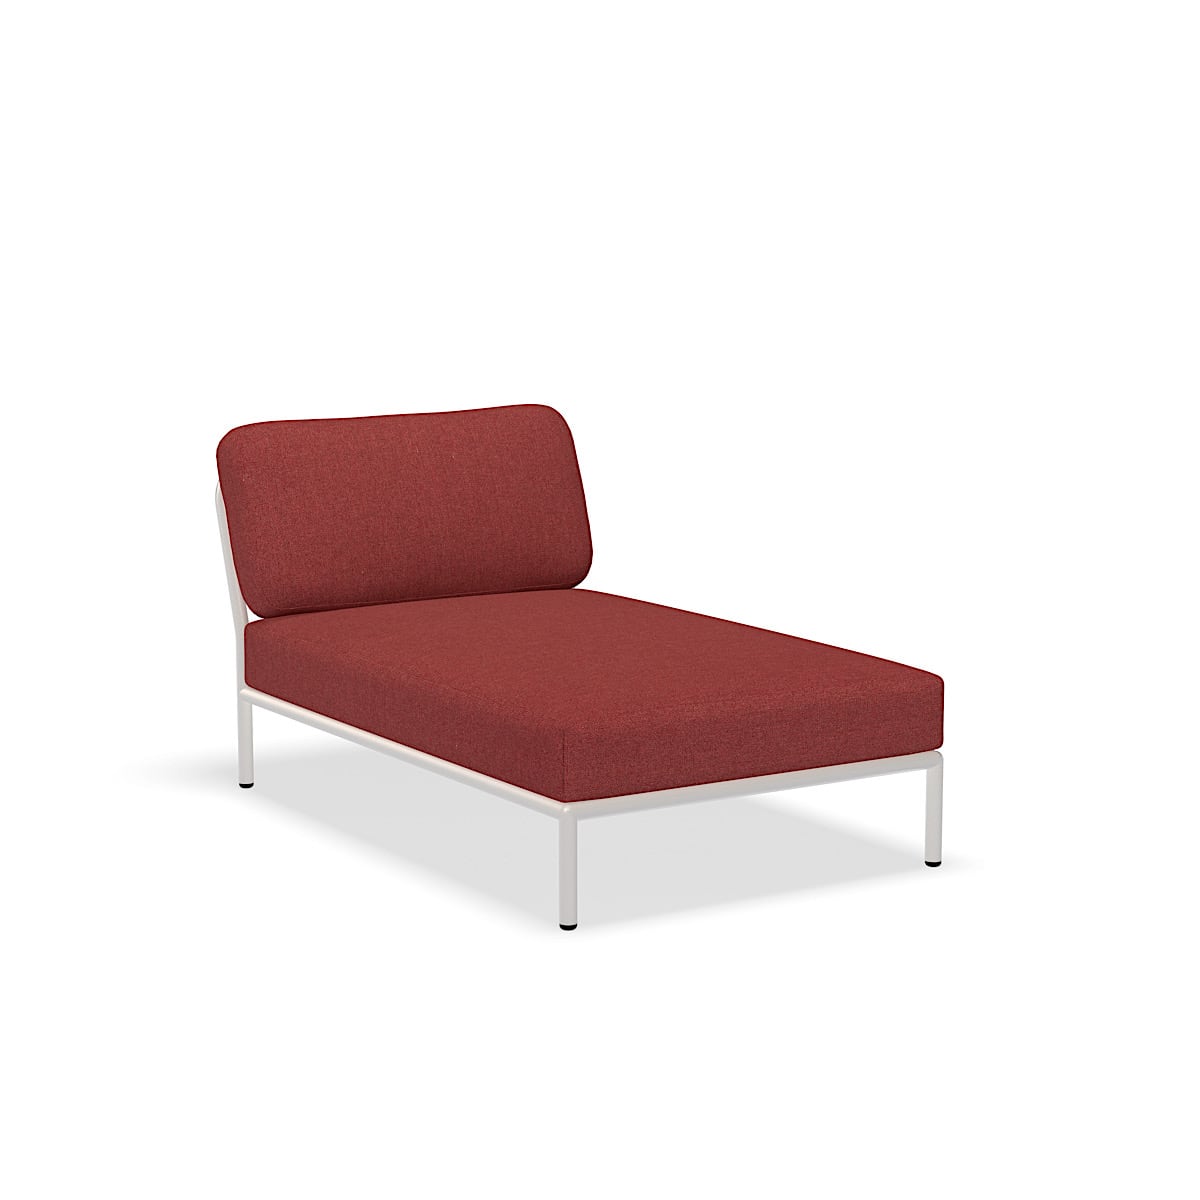 躺椅：139 x 81 x 68.5 釐米（長 x 寬 x 高） - 12209-1643 - 躺椅， Scarlet （HERITAGE）， 白色結構